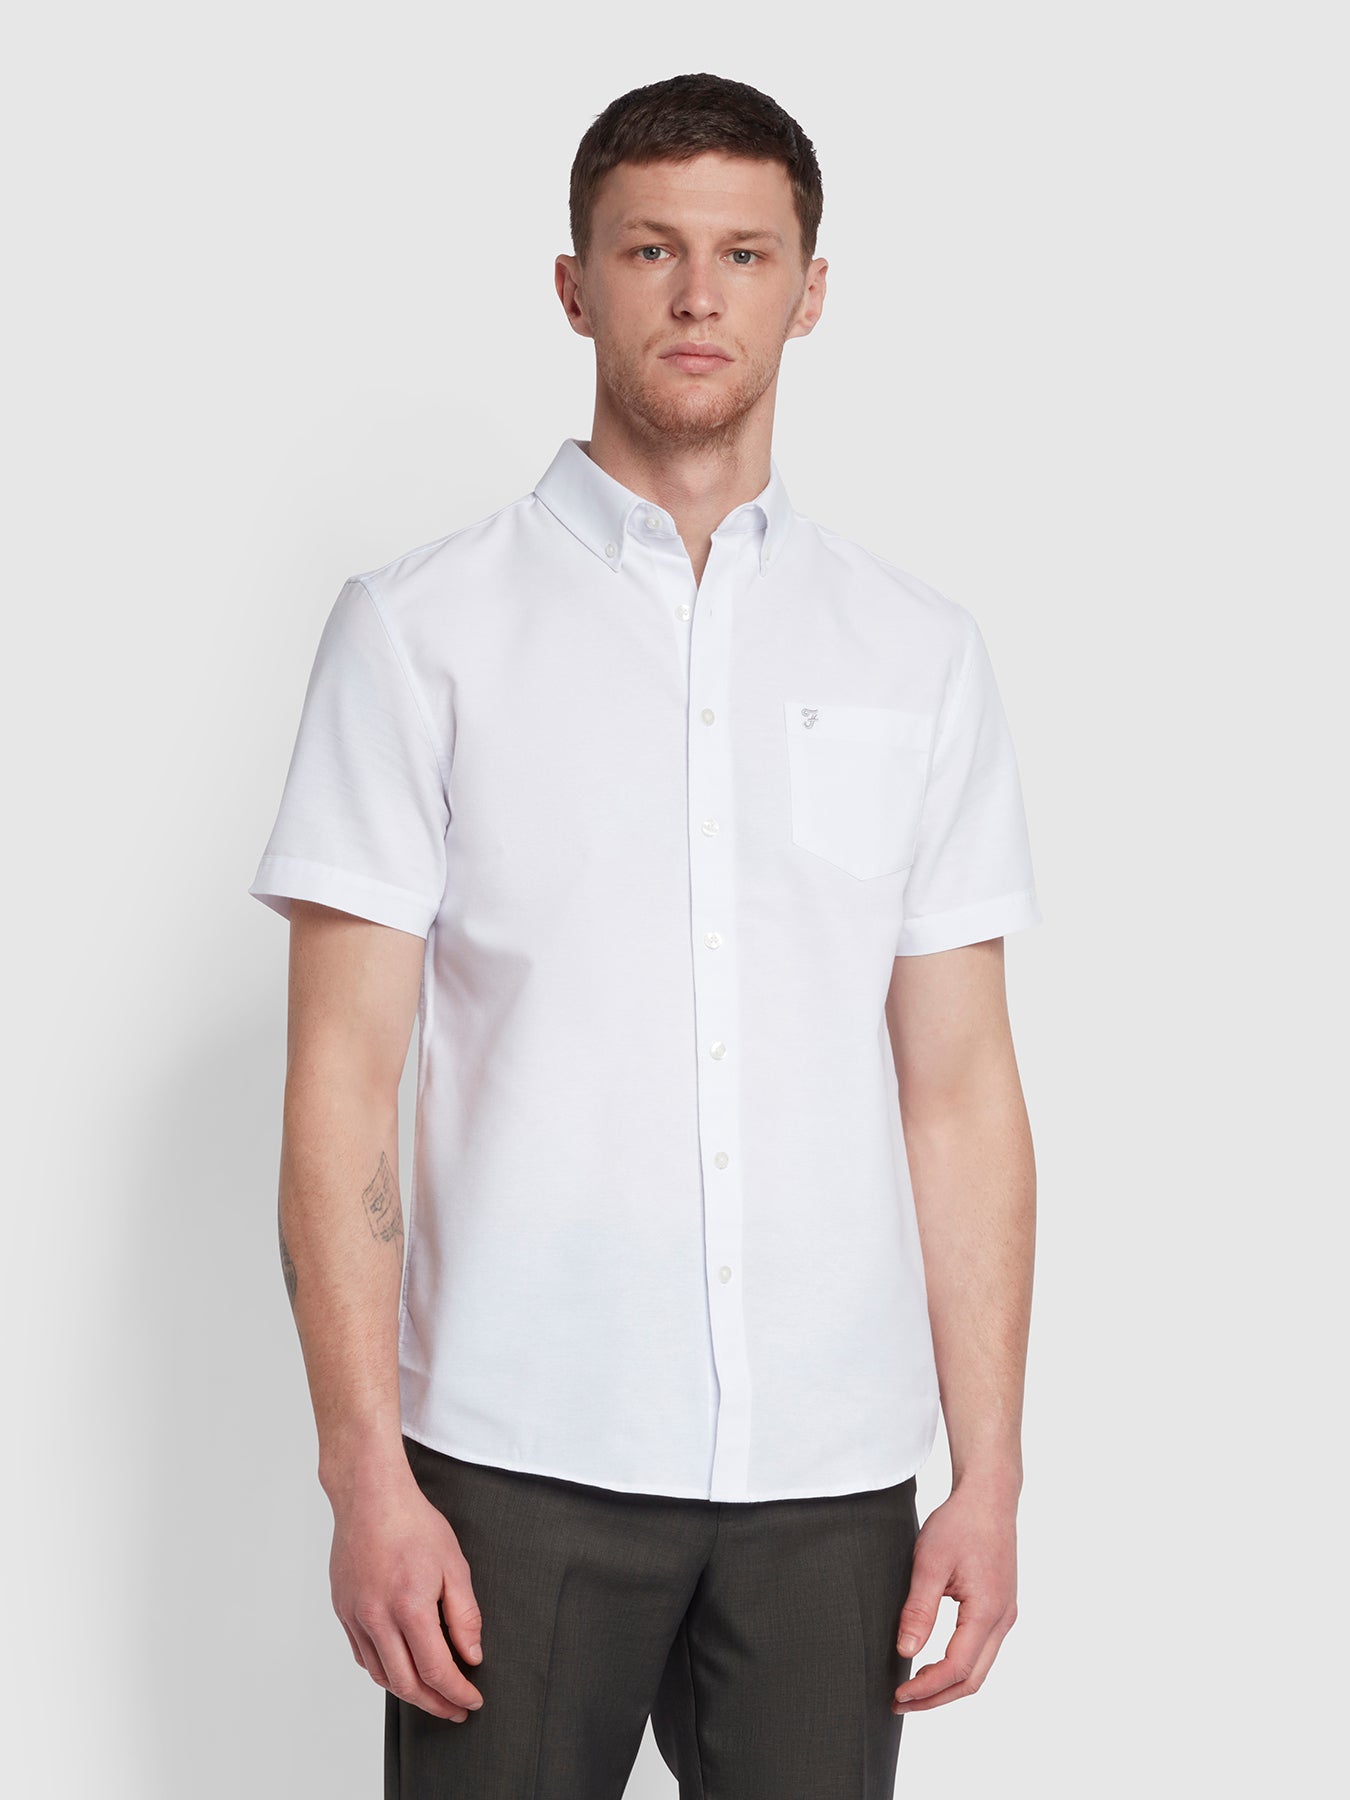 View Drayton Short Sleeve Oxford Shirt In White information